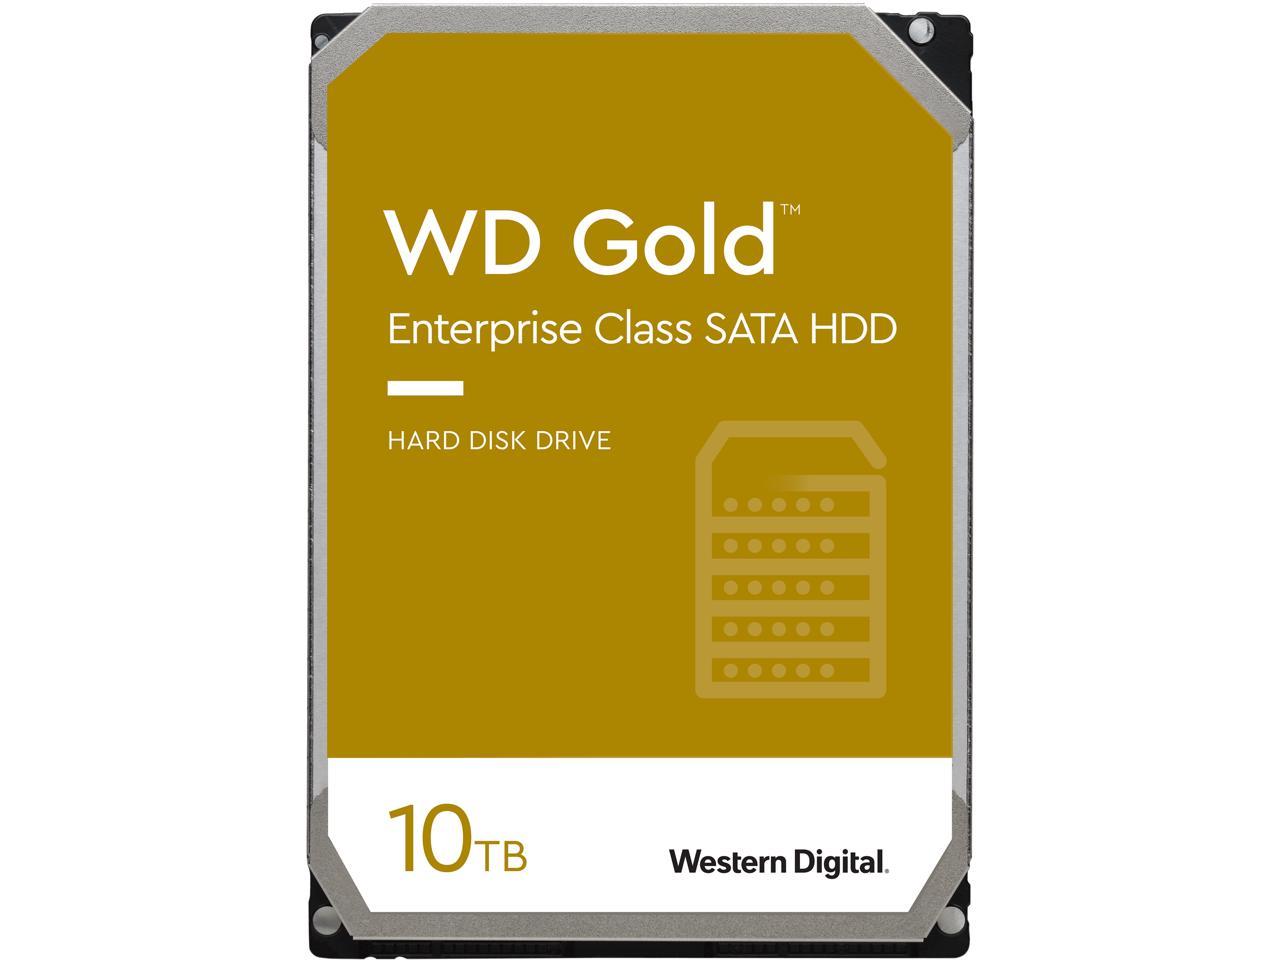 Wd Gold 10Tb Enterprise Class Hard Disk Drive - 7200 Rpm Class Sata 6Gb/S 256Mb Cache 3.5 Inch - Wd102Kryz